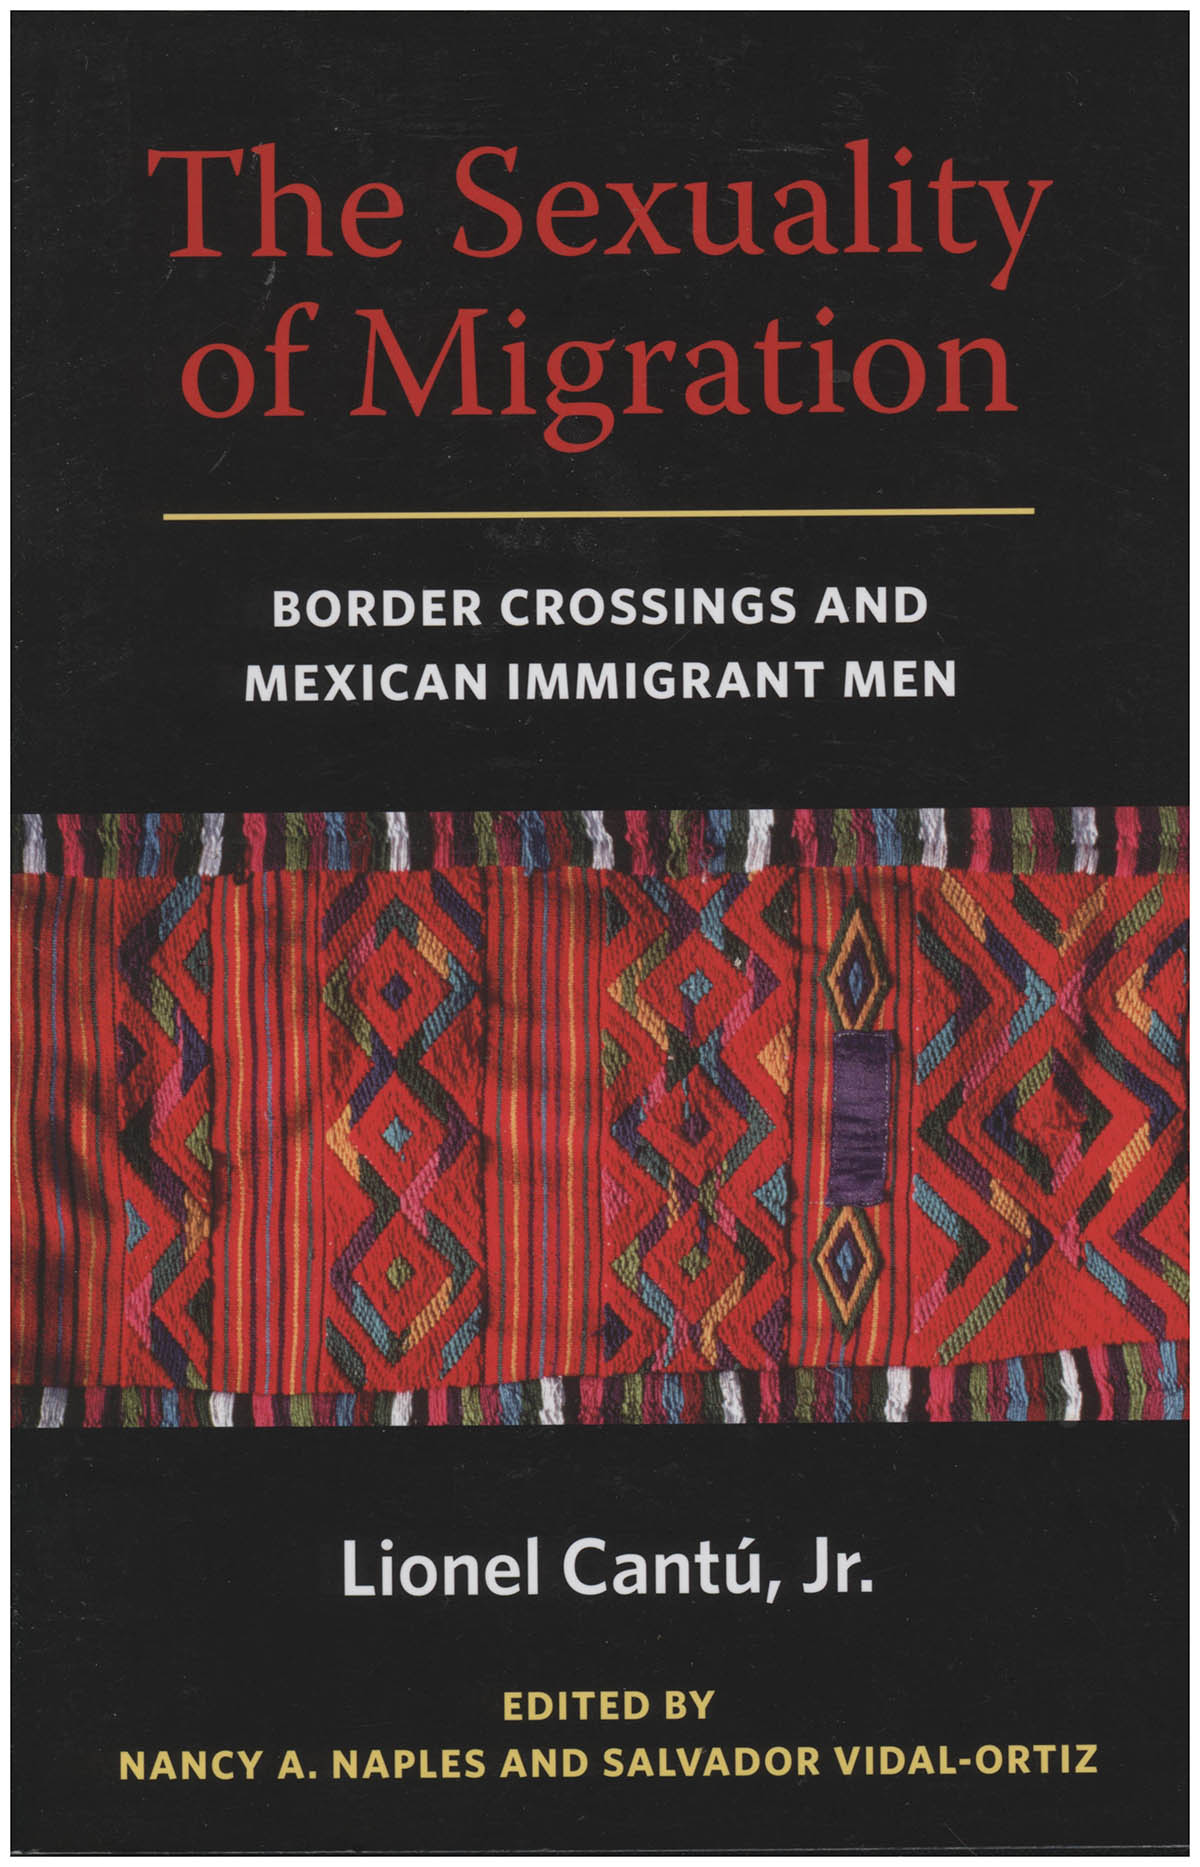 Cantú, Lionel Jr.; Naples, Nancy A.; Vidal-Ortiz, Salvador - The Sexuality of Migration: Border Crossings and Mexican Immigrant Men